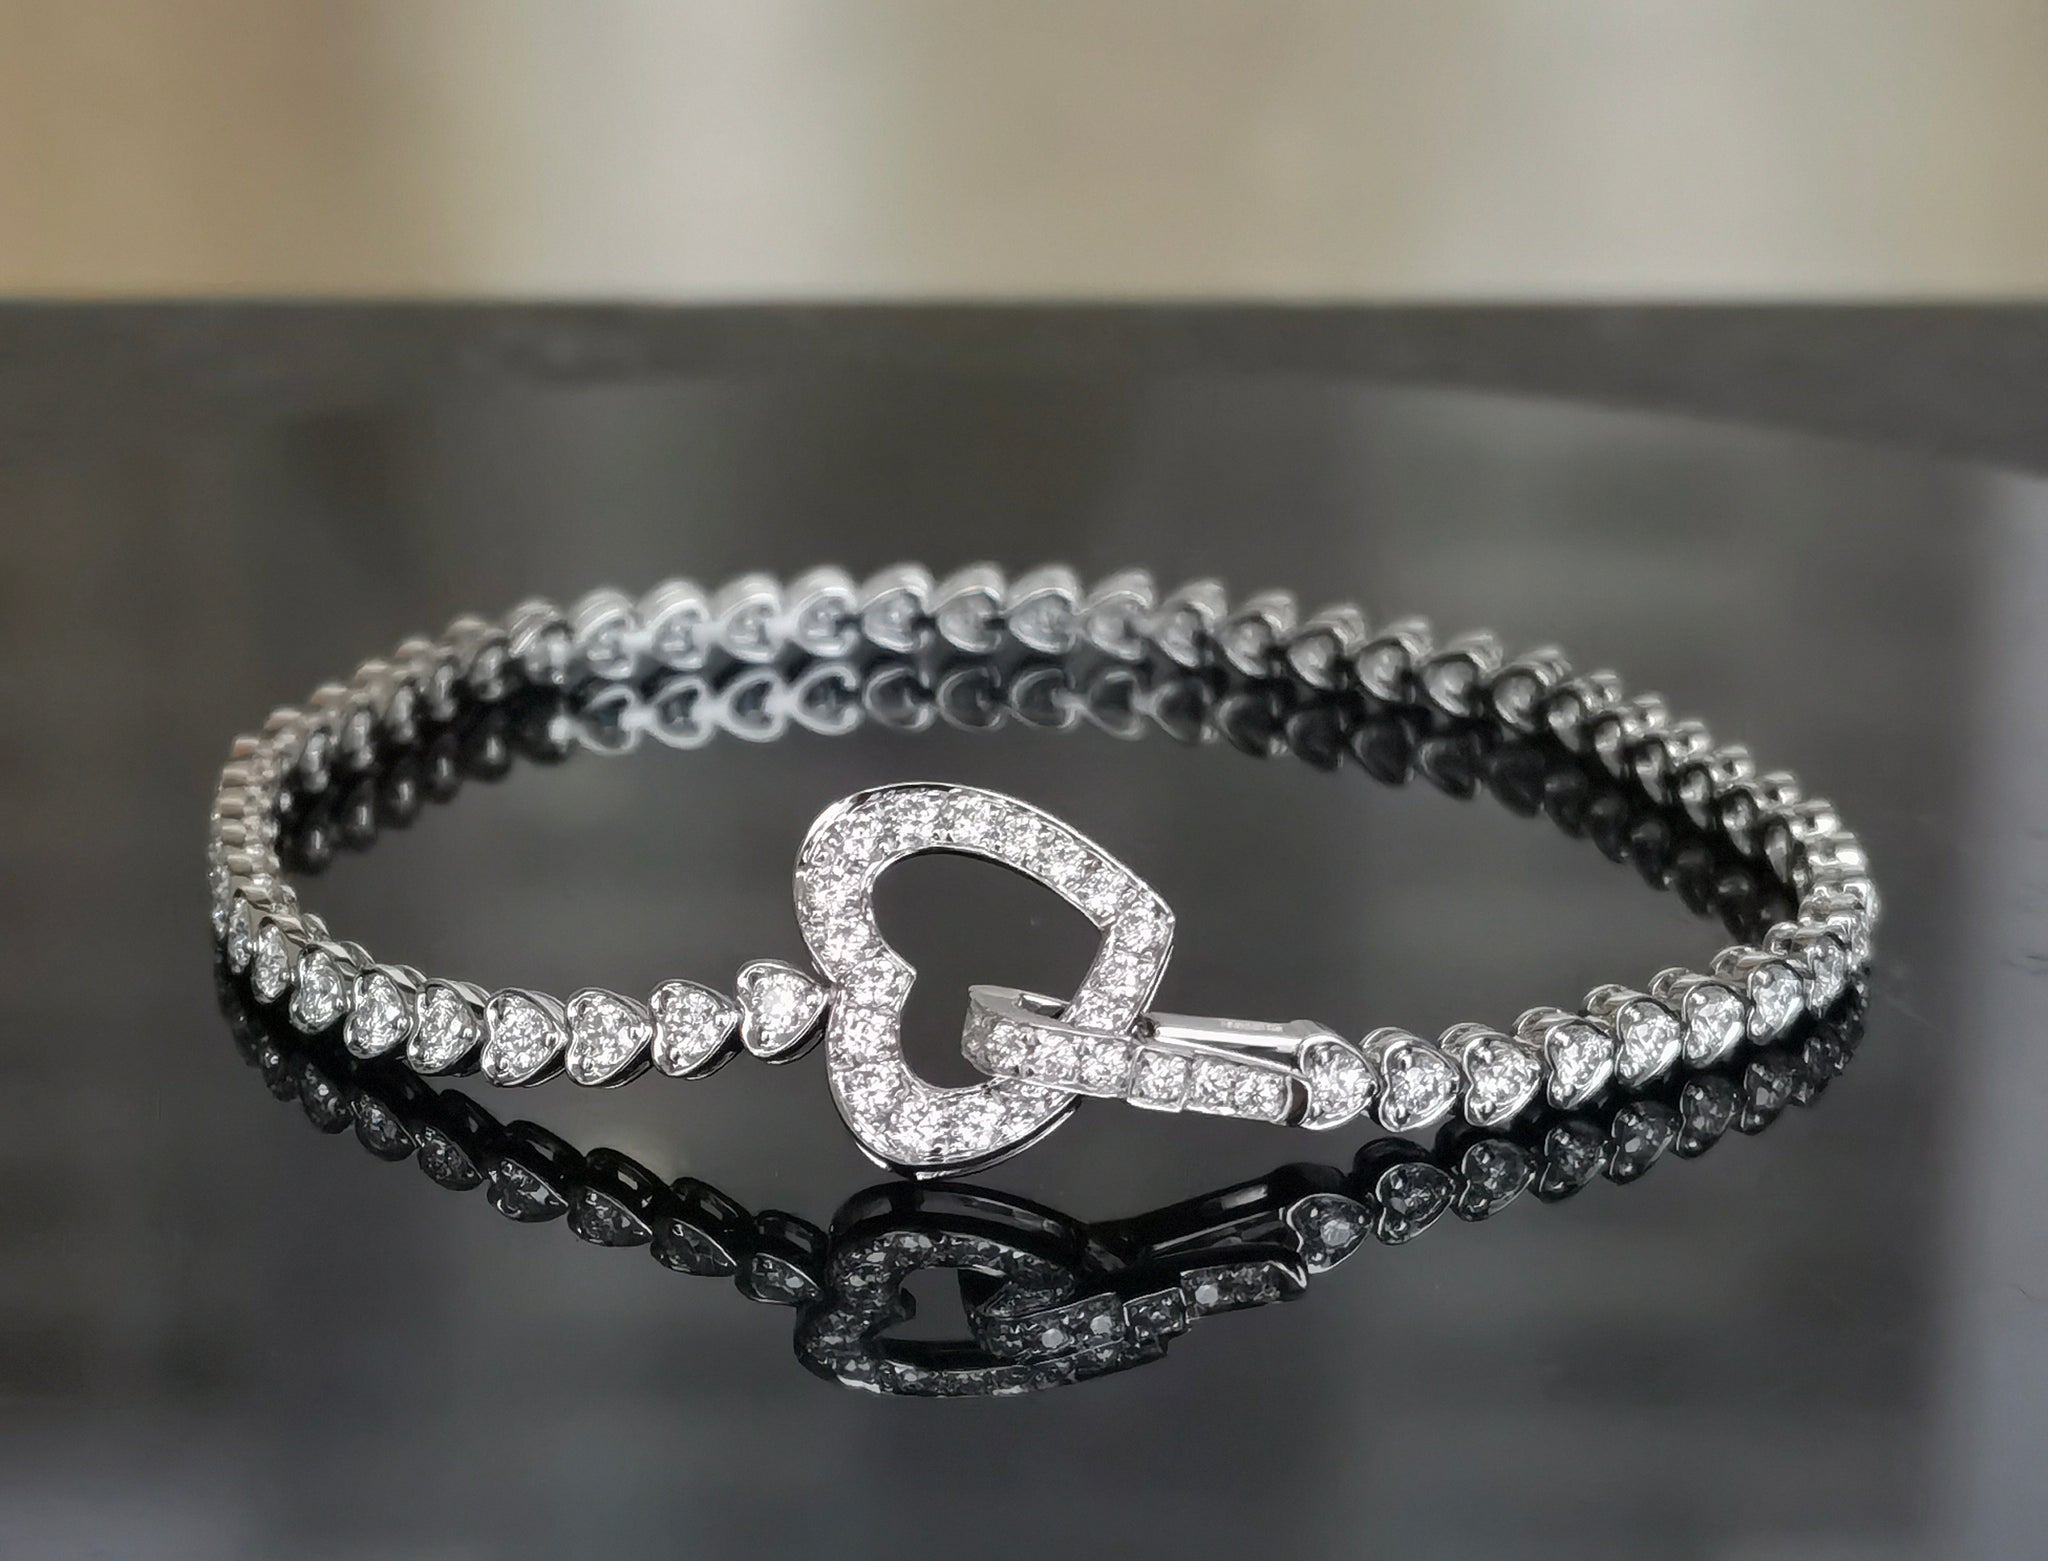 doveggs moissanite/lab create diamond bracelet with accents 17.5cm length